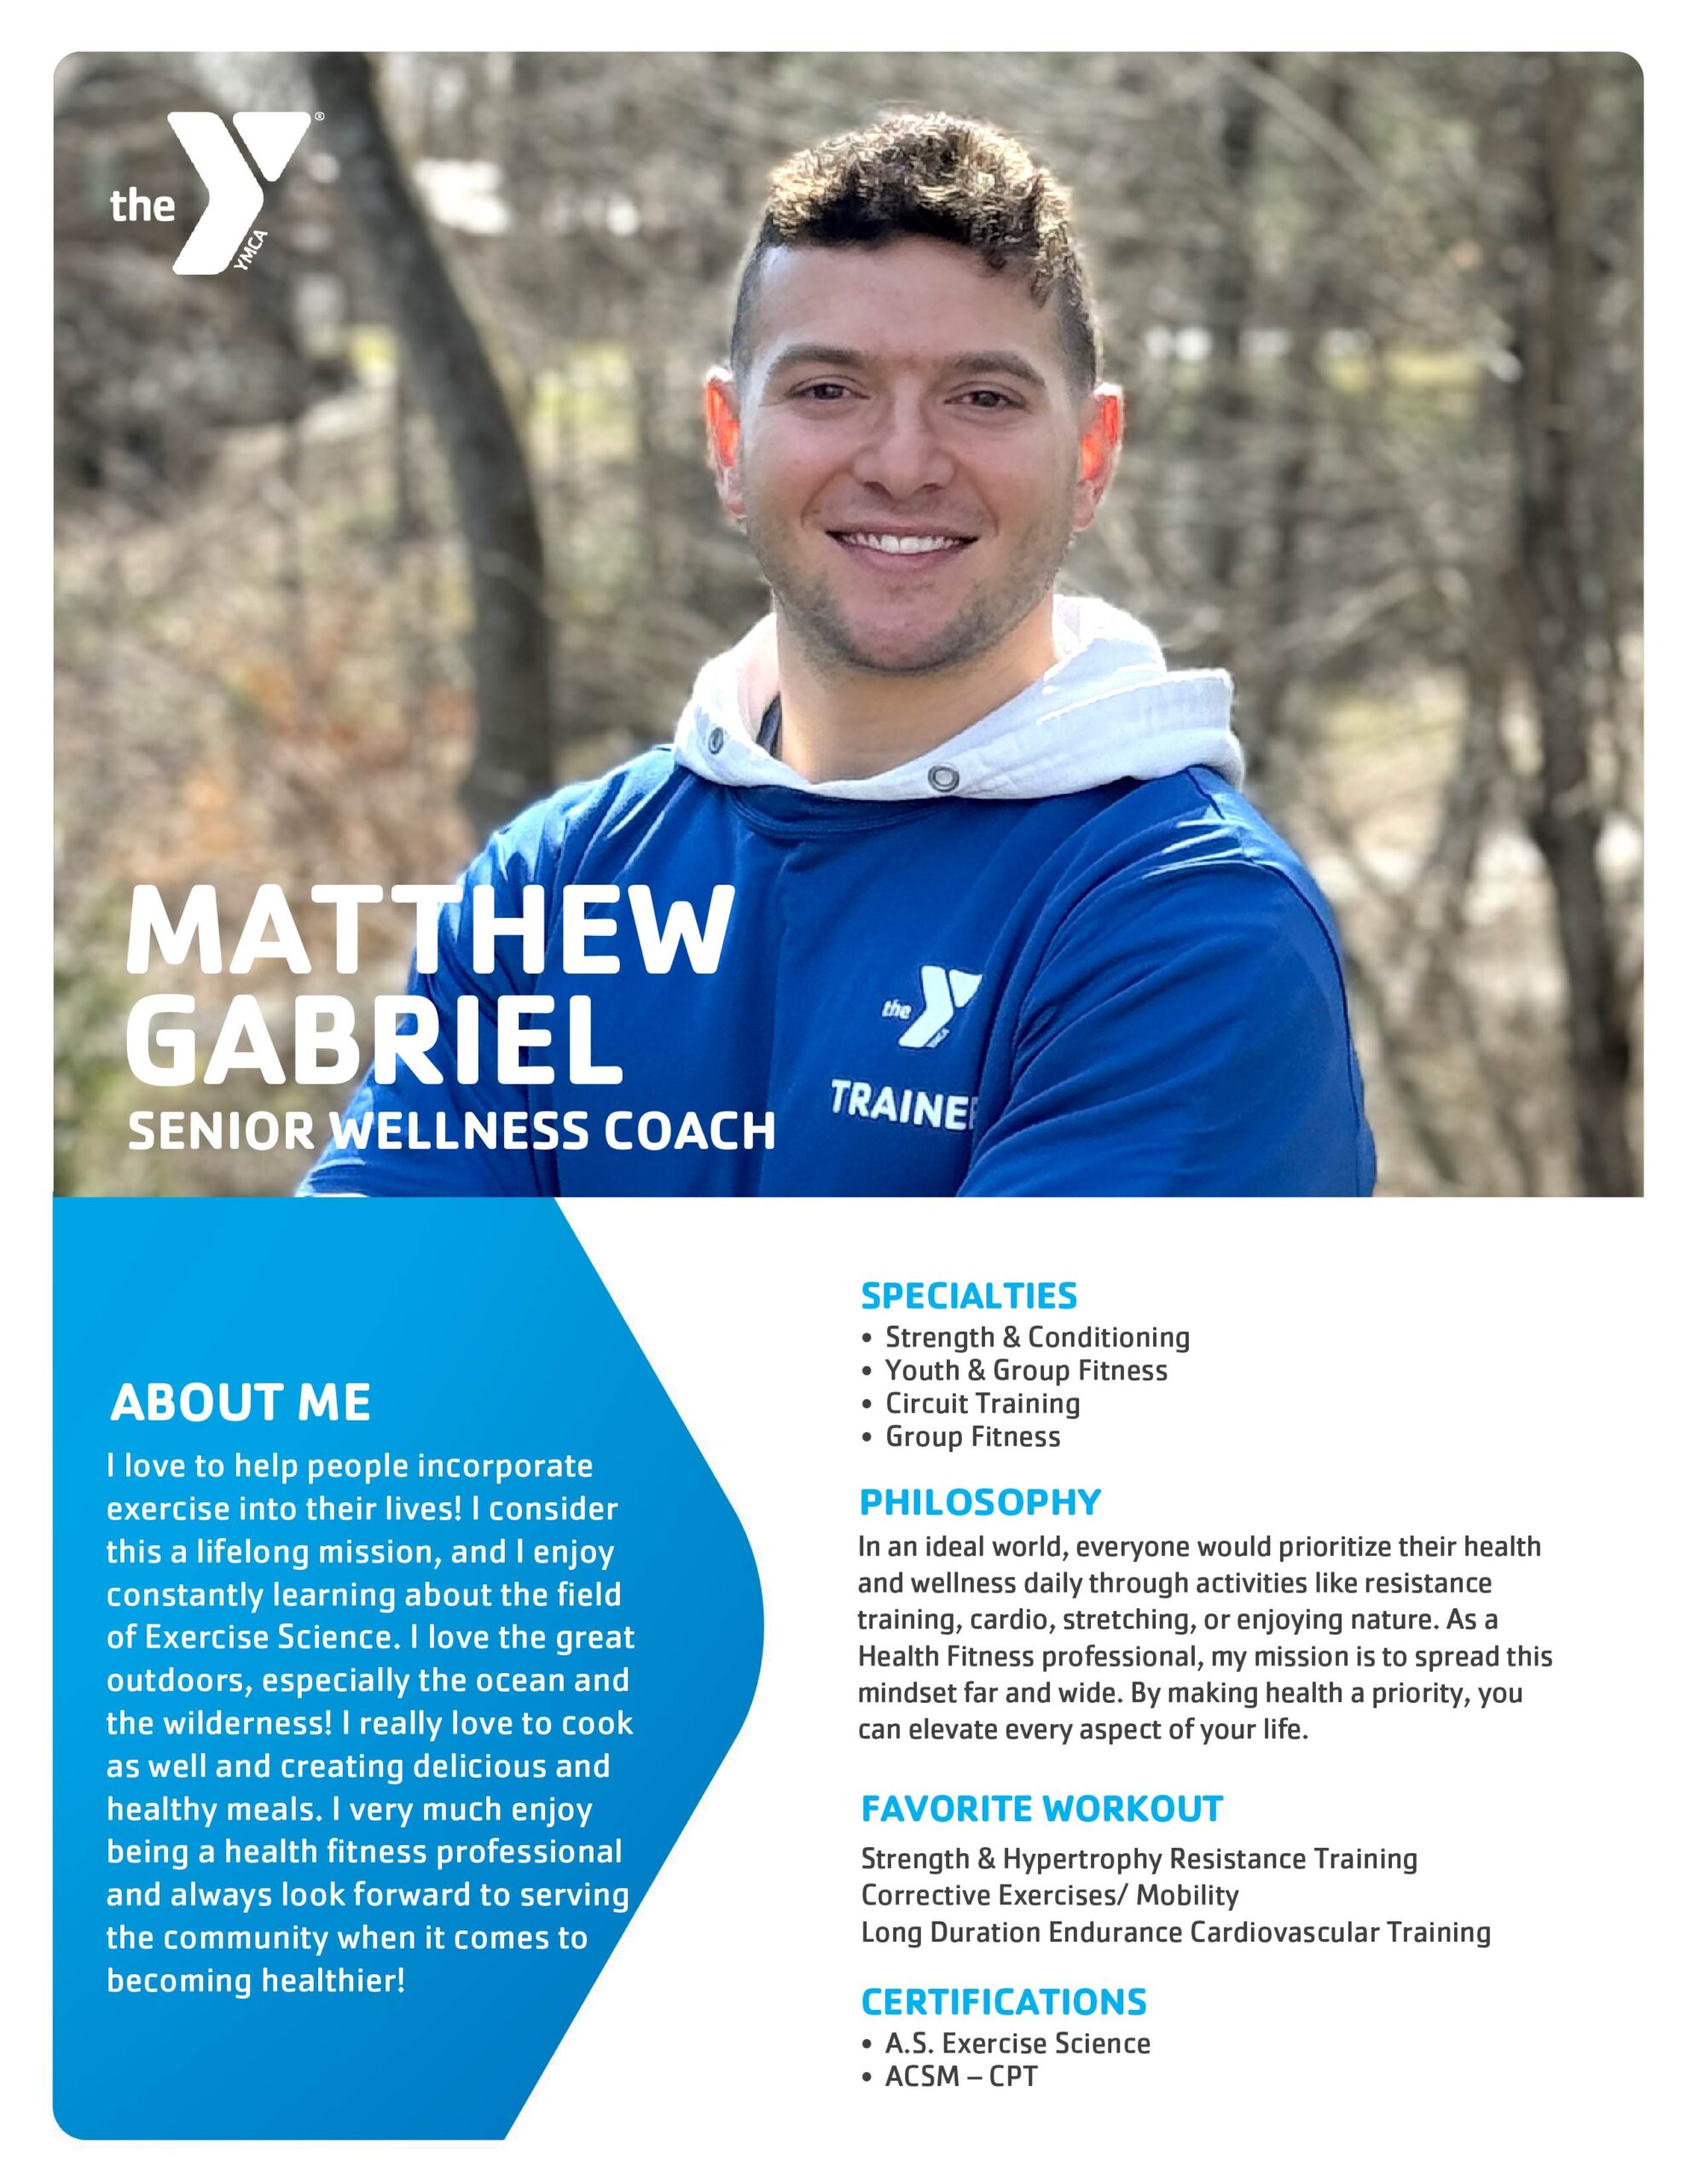 Matt Gabriel Personal Training Senior Wellness Coach